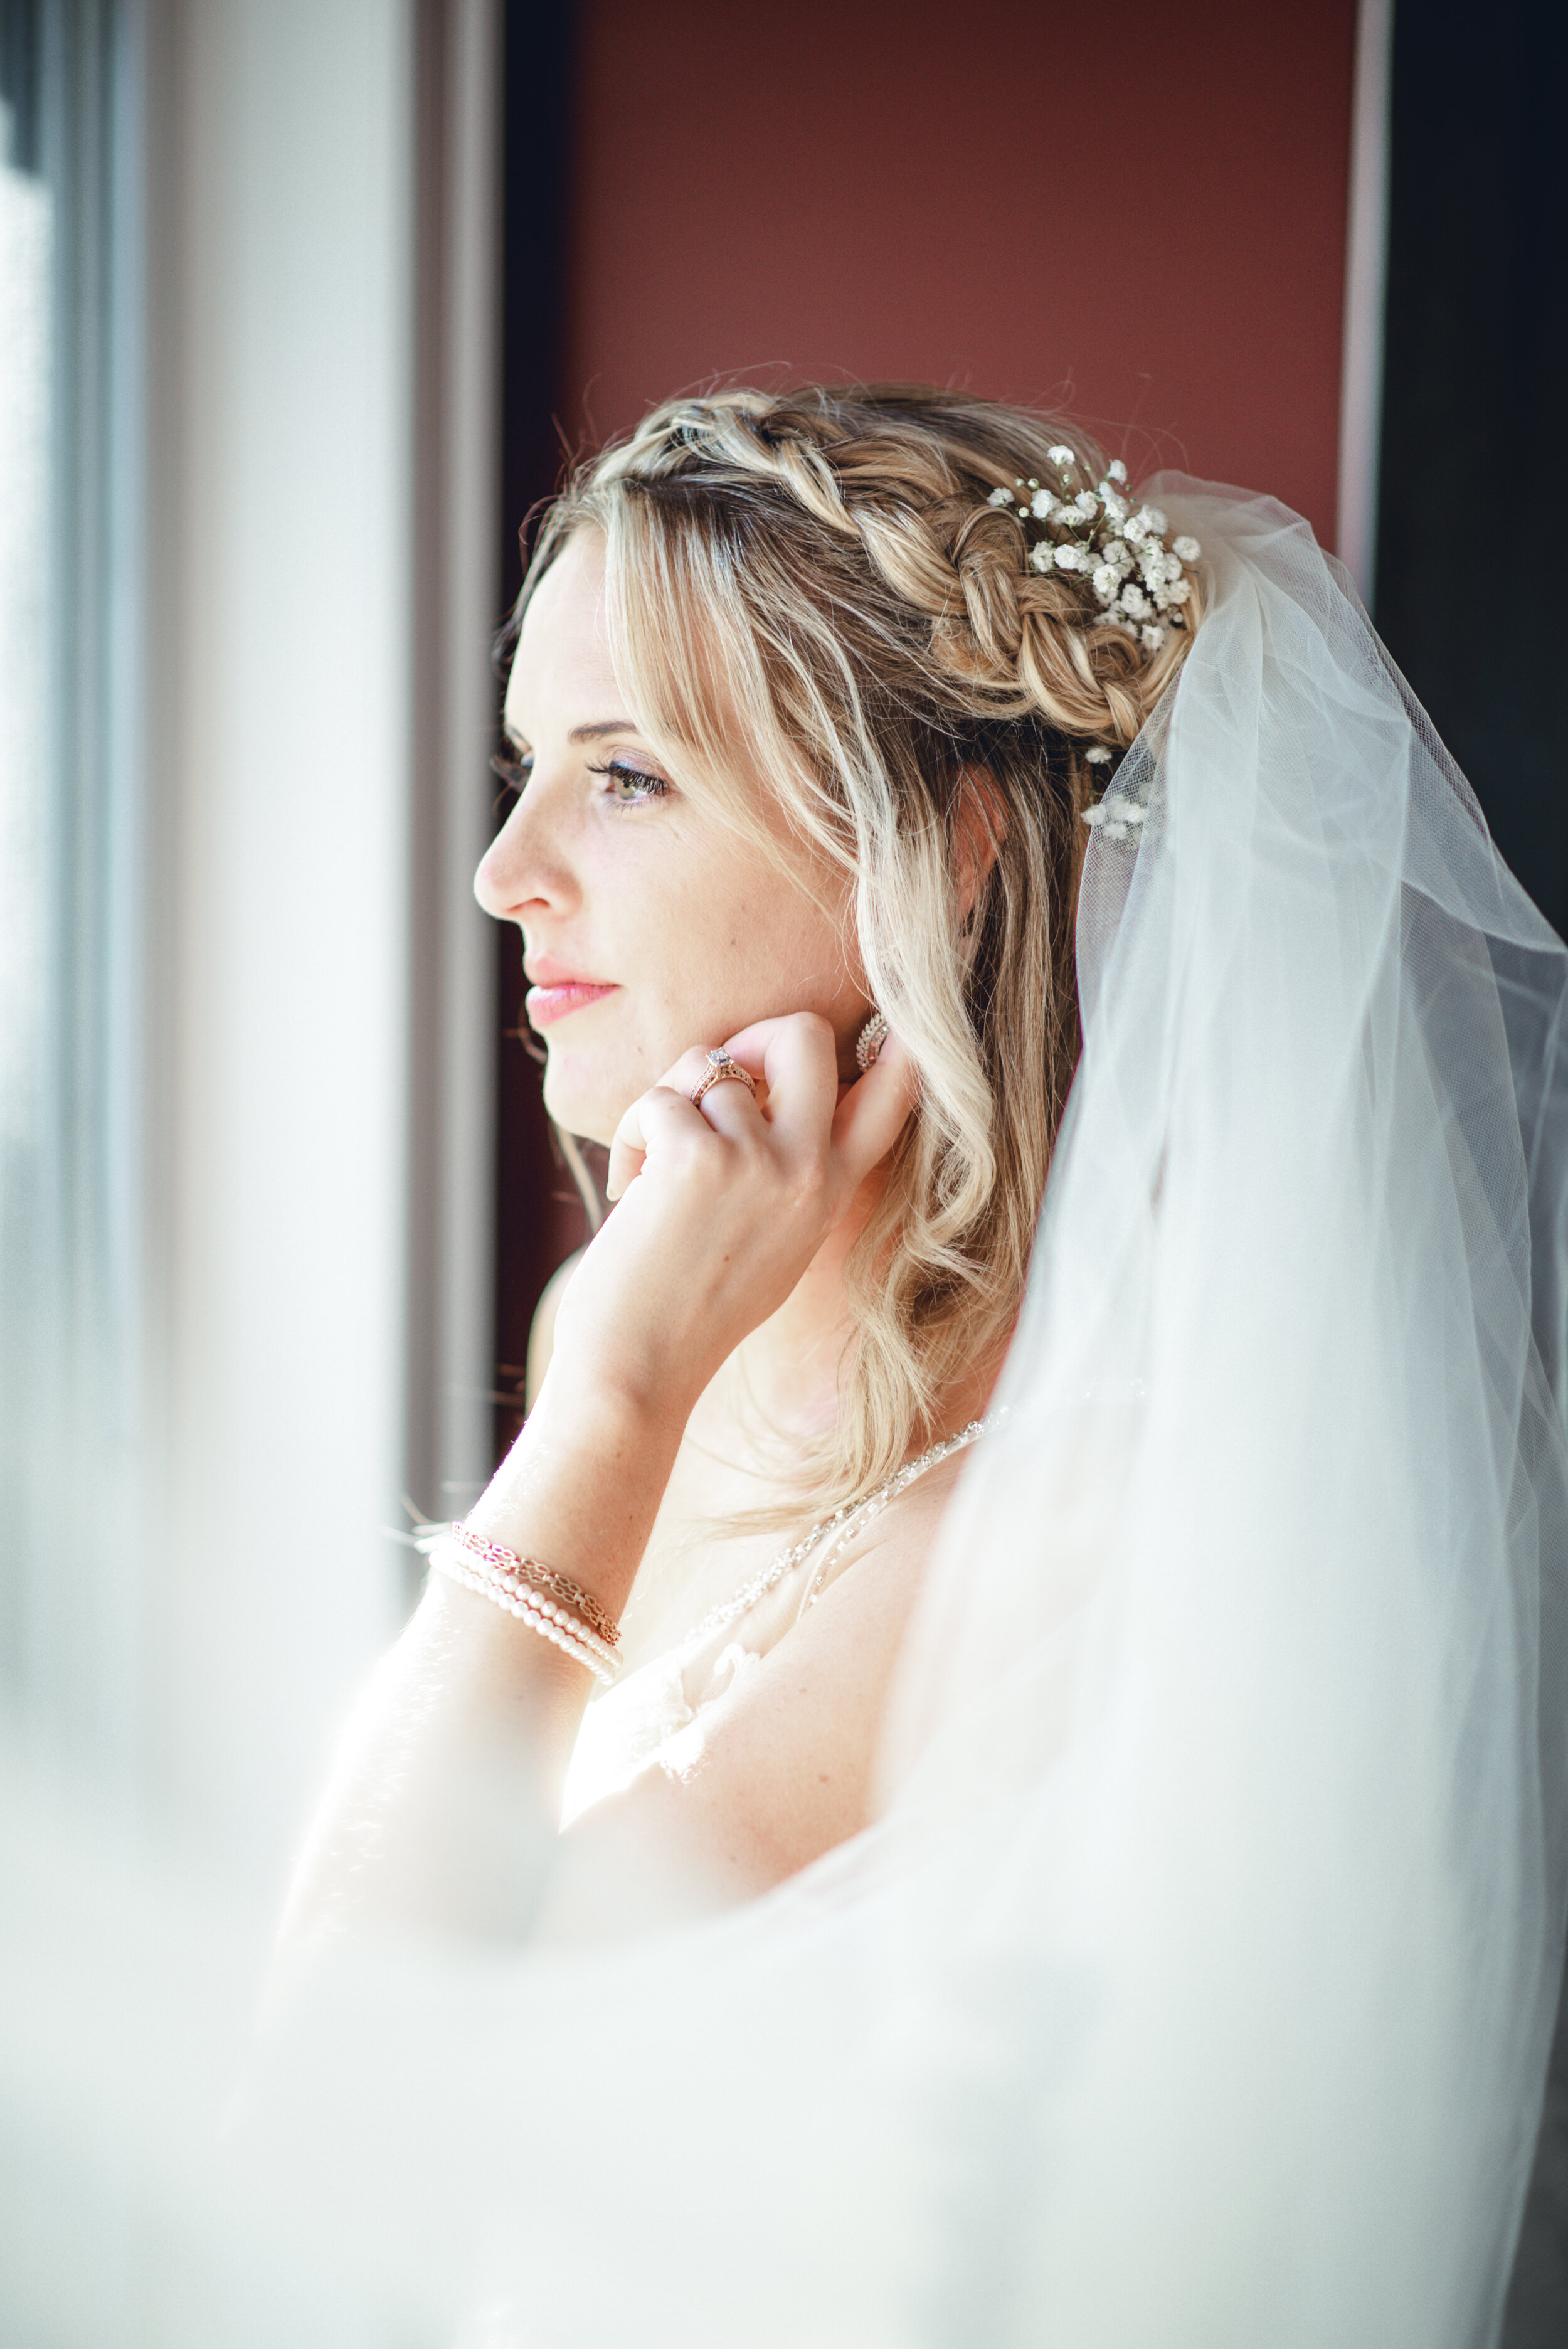 Bride at window - eTangPhotography.com